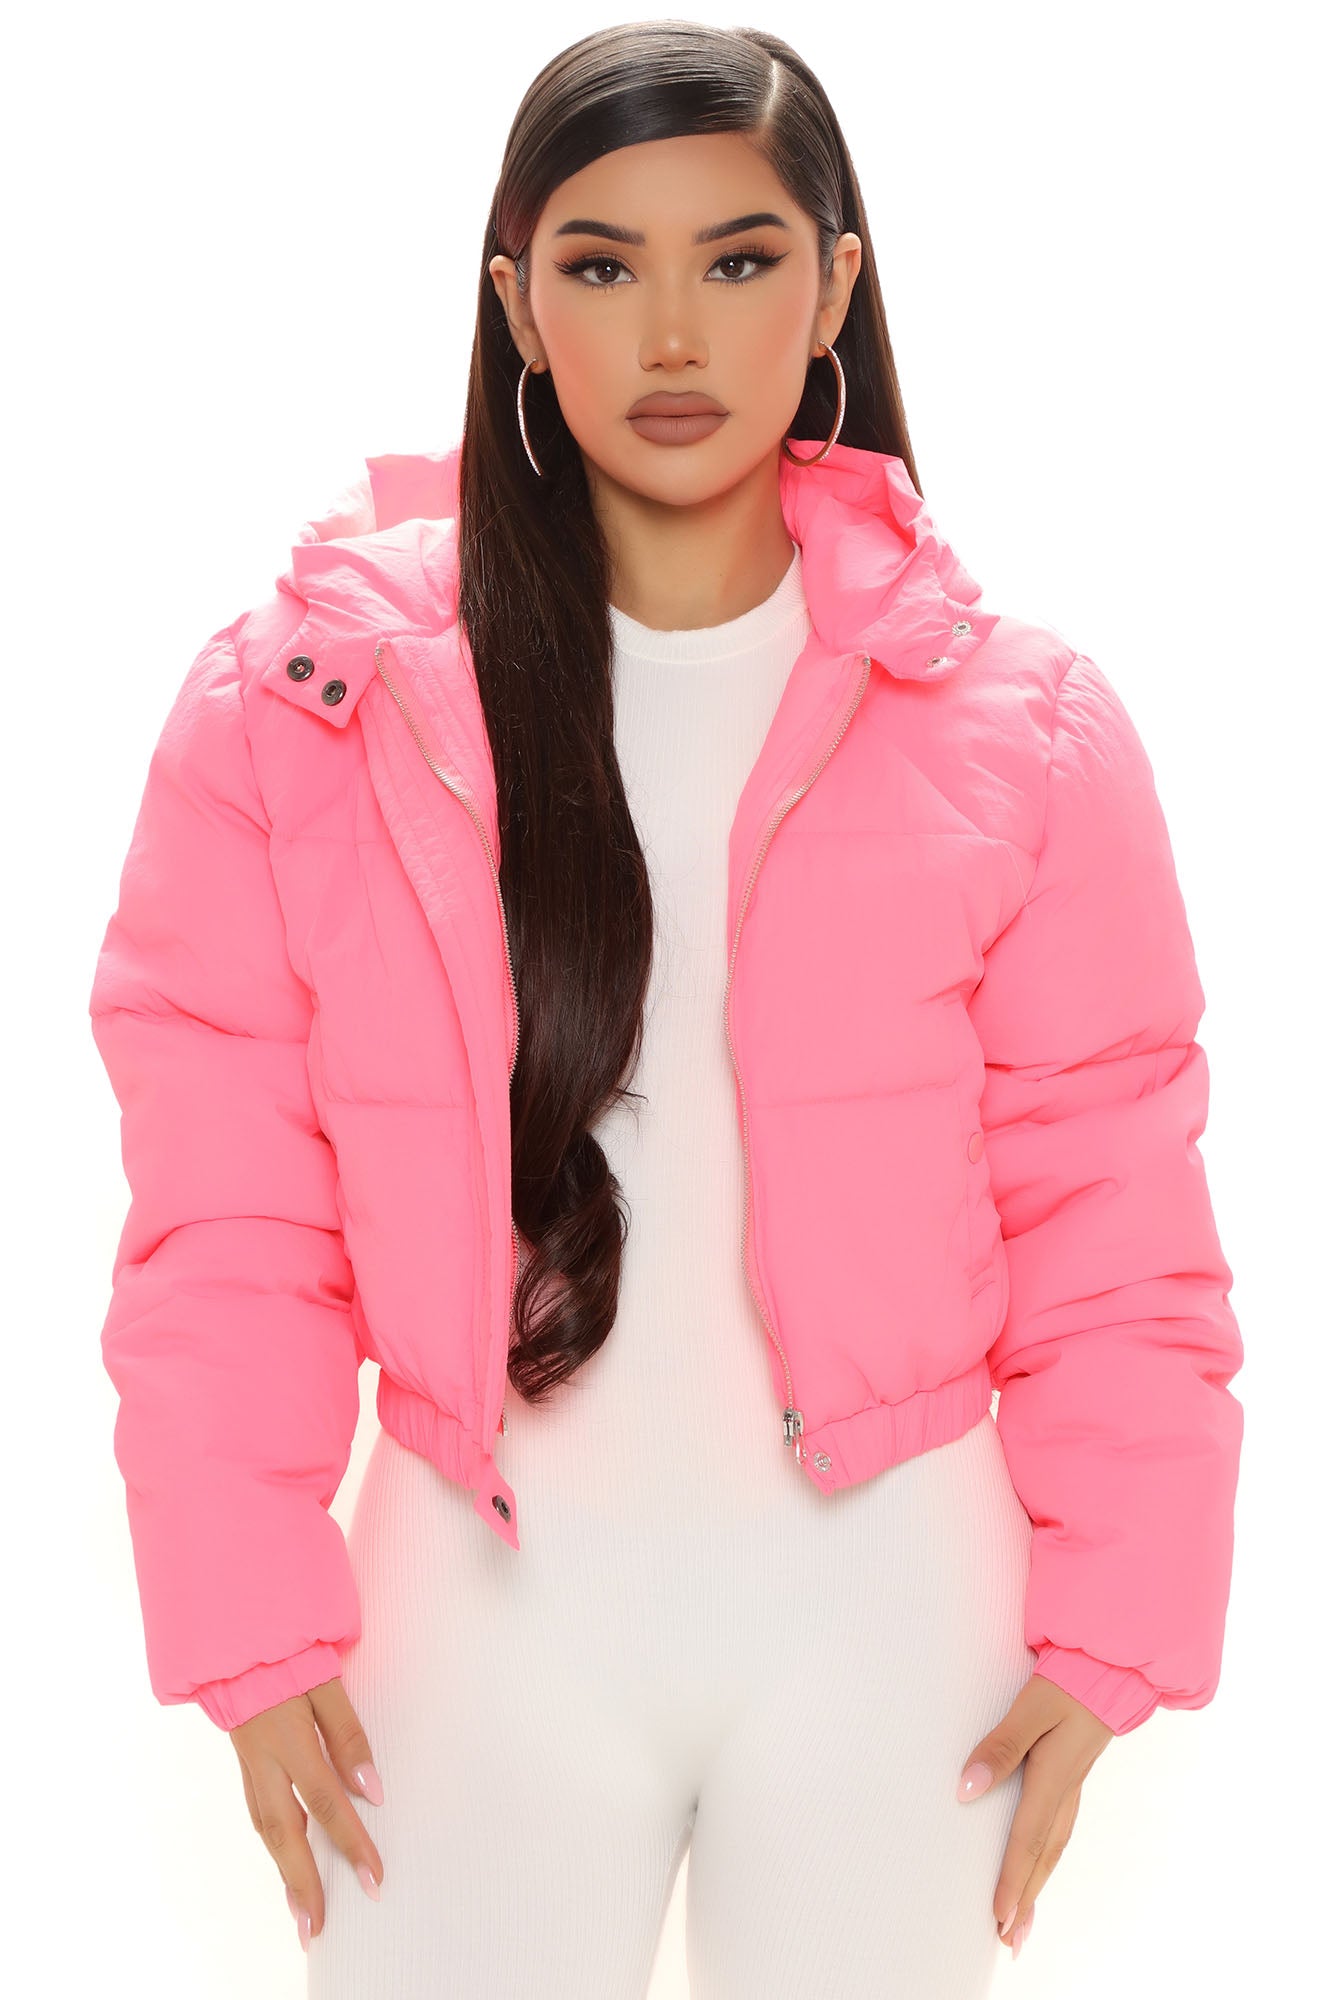 Can't Be Beat Cropped Puffer Jacket - Pink, Fashion Nova, Jackets & Coats